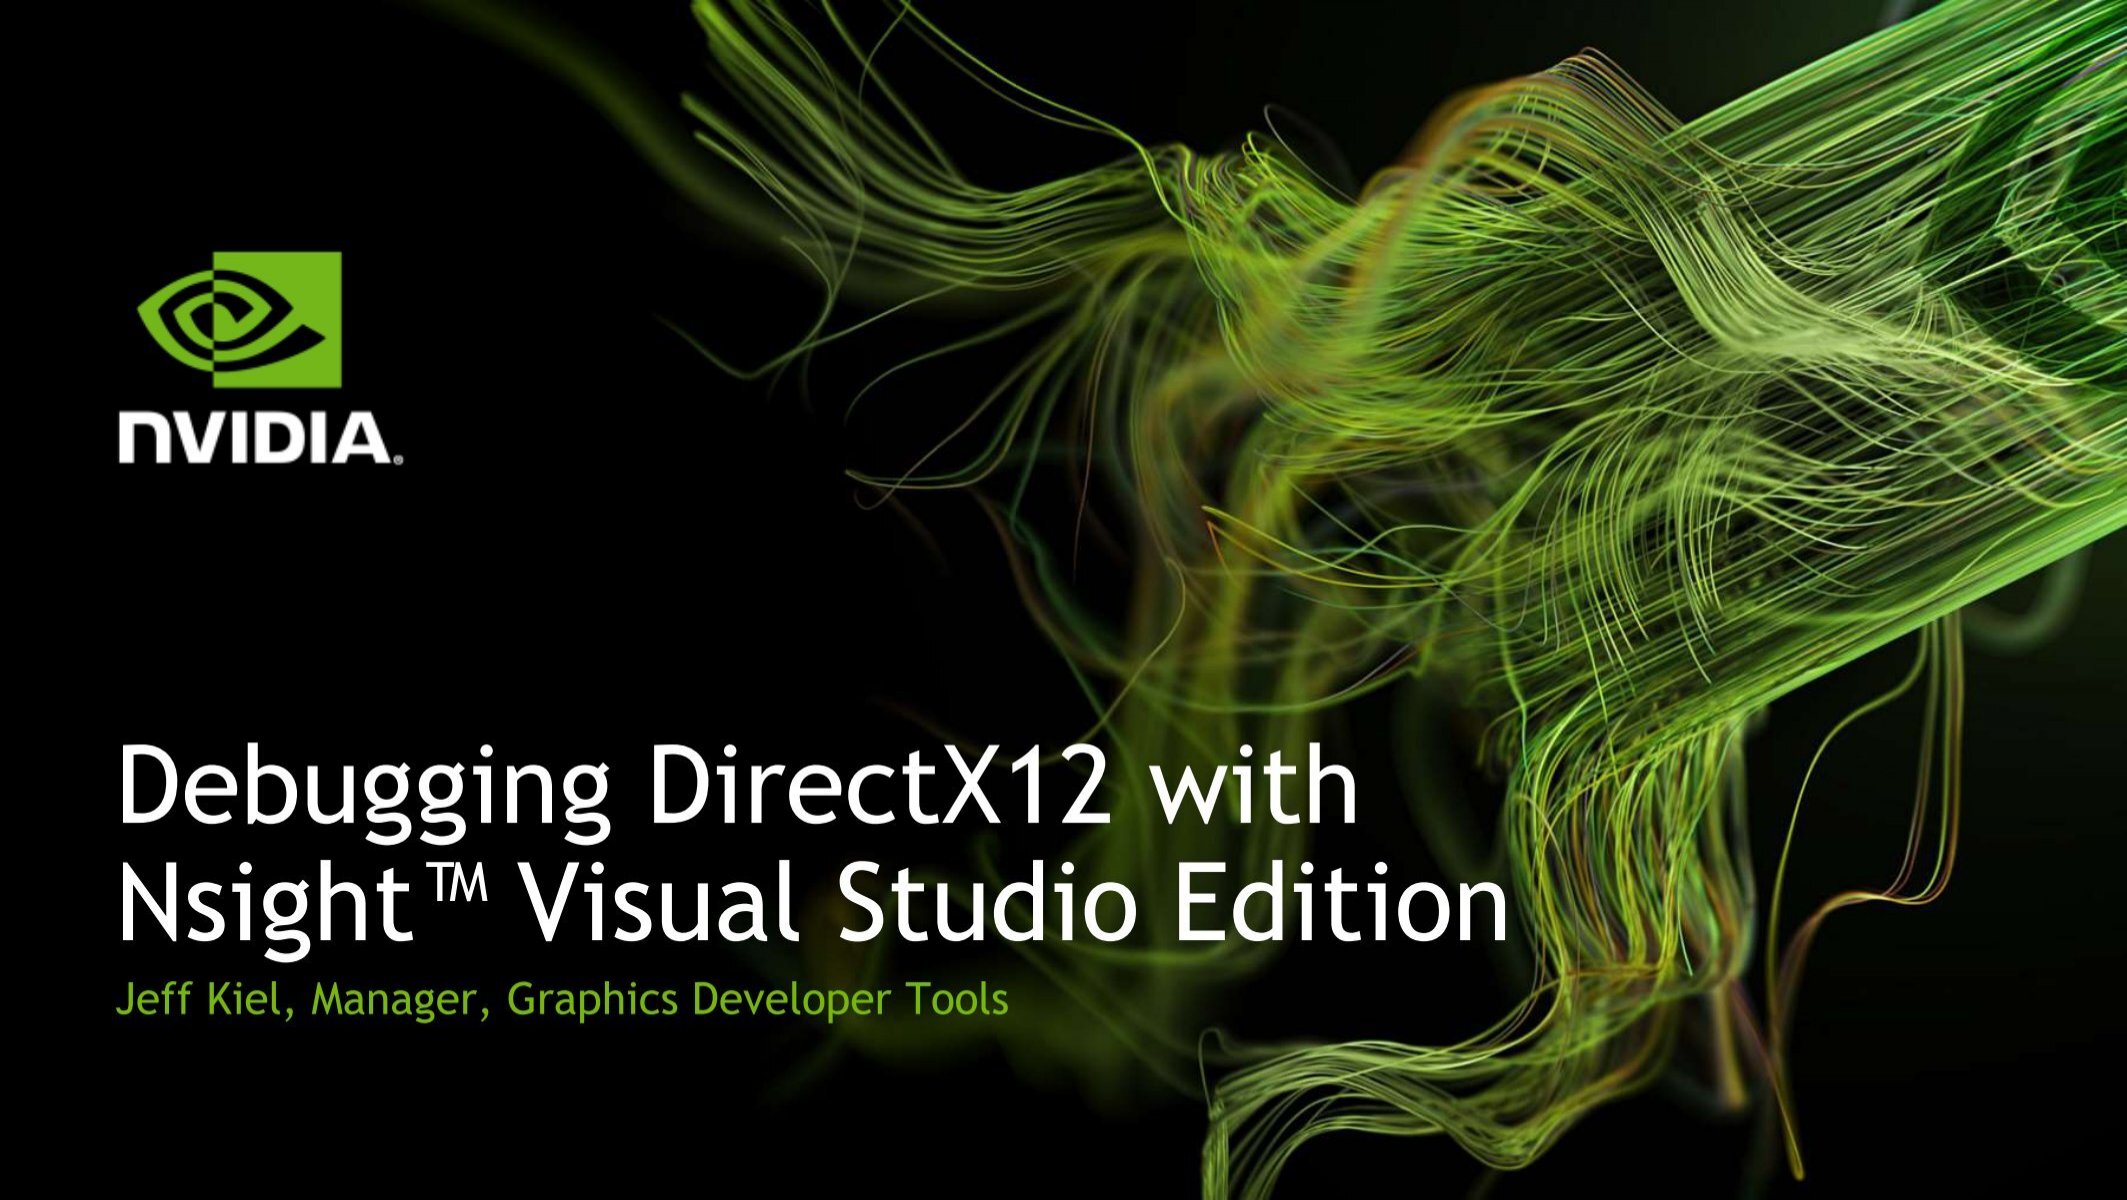 NVIDIA Nsight Visual Studio Edition